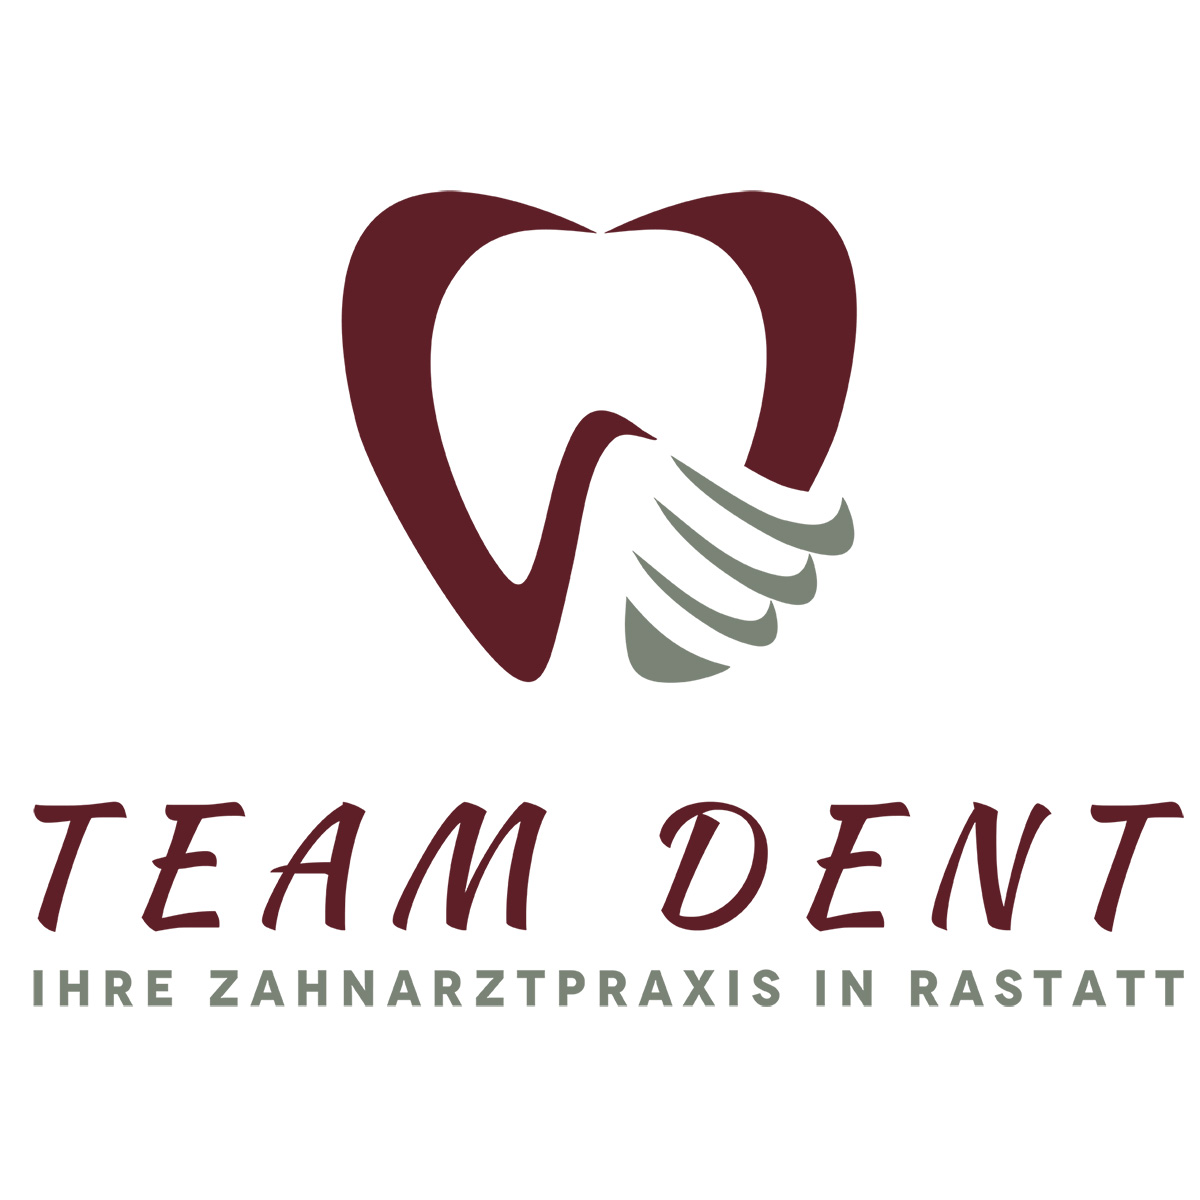 Kundenfoto 4 Zahnarztpraxis Rastatt TEAM DENT